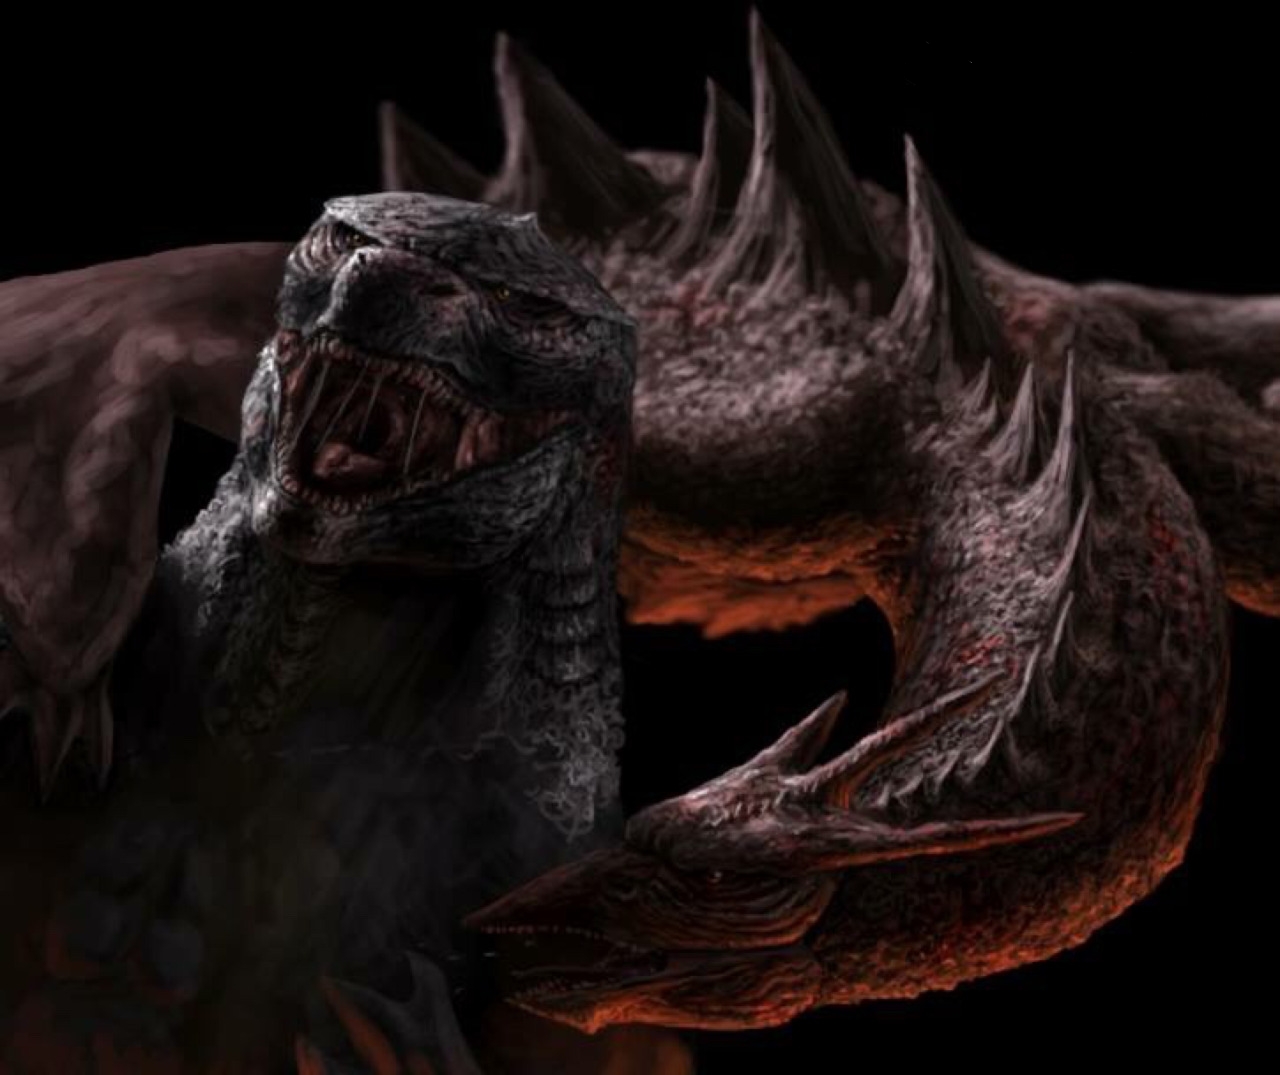 Godzilla vs. Rodan - Godzilla 2 Fan Art